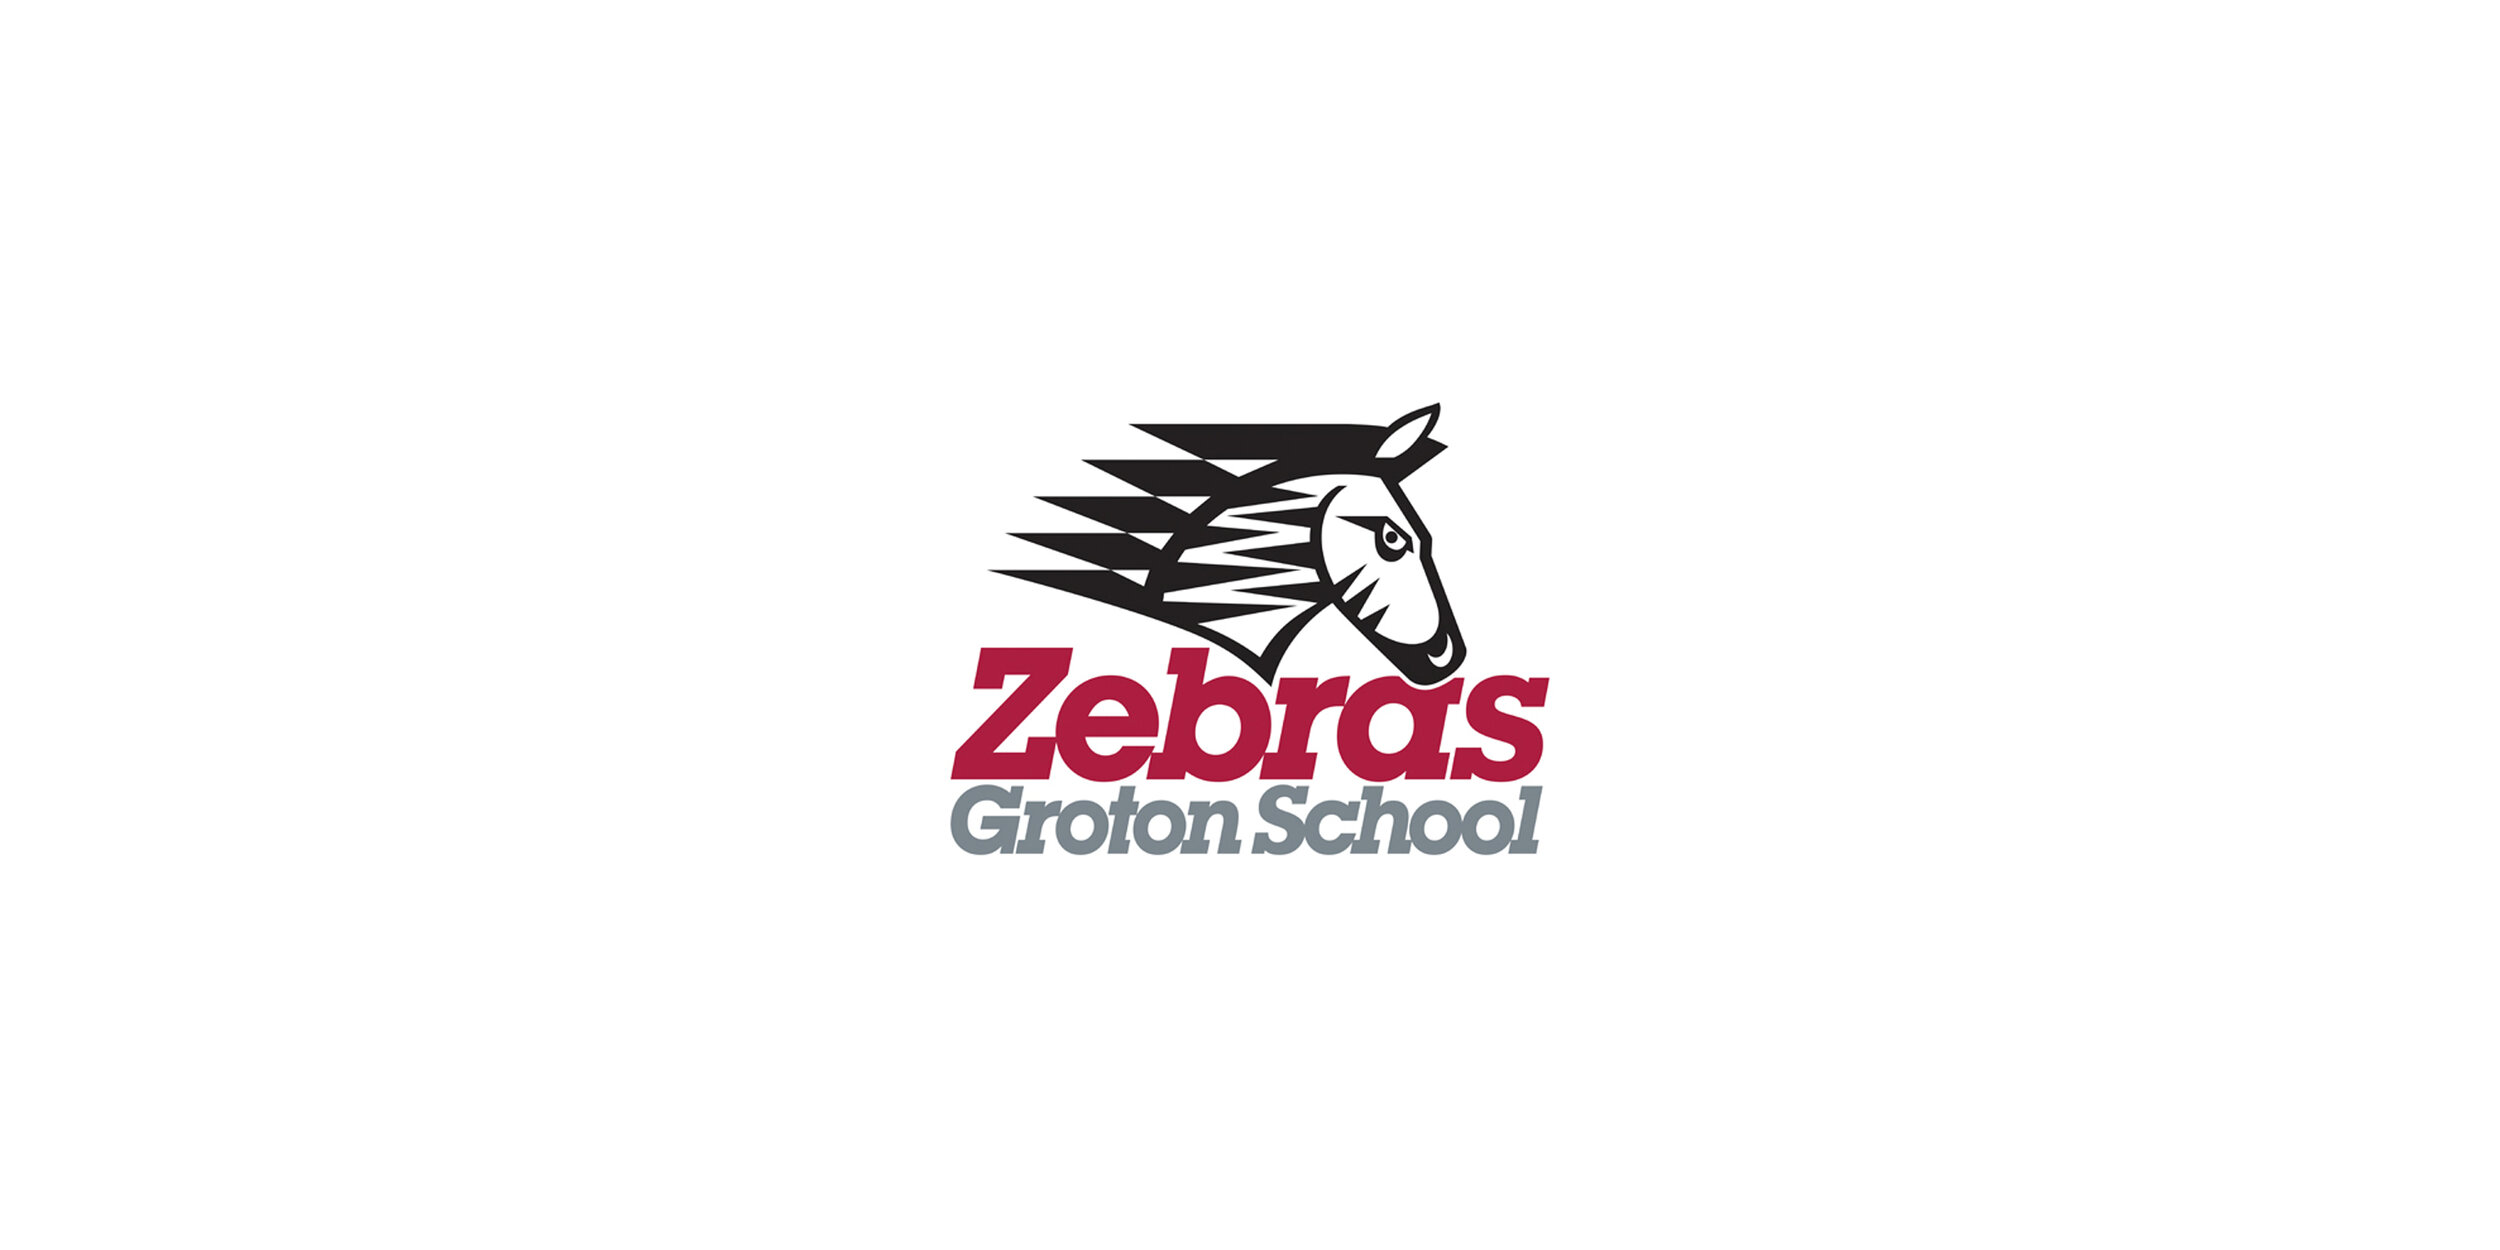 Groton School Zebras